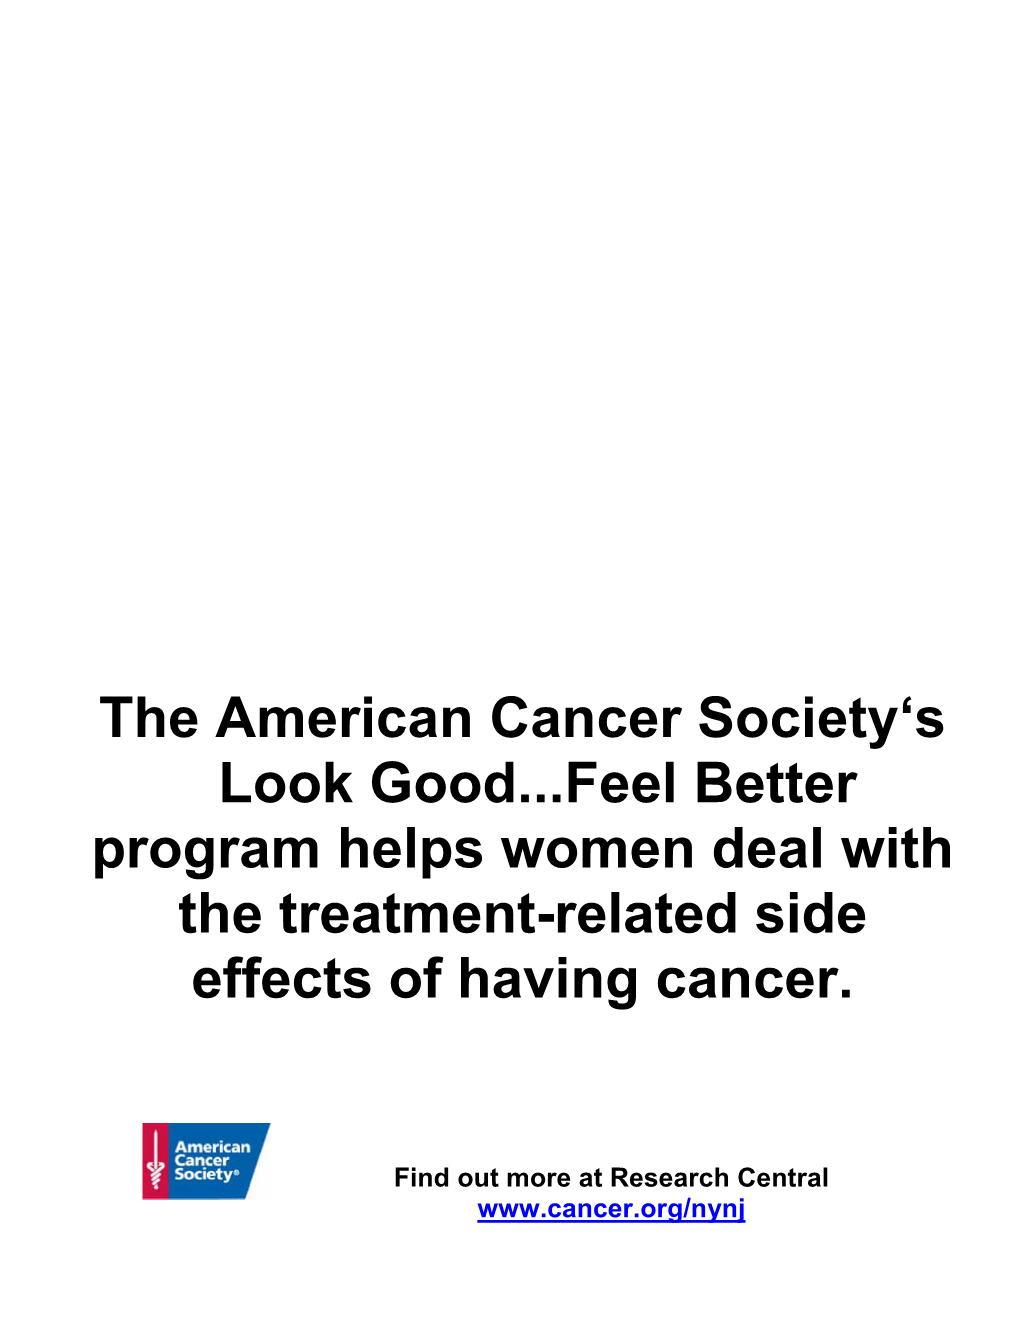 The American Cancer Society's Look Good...Feel Better Program